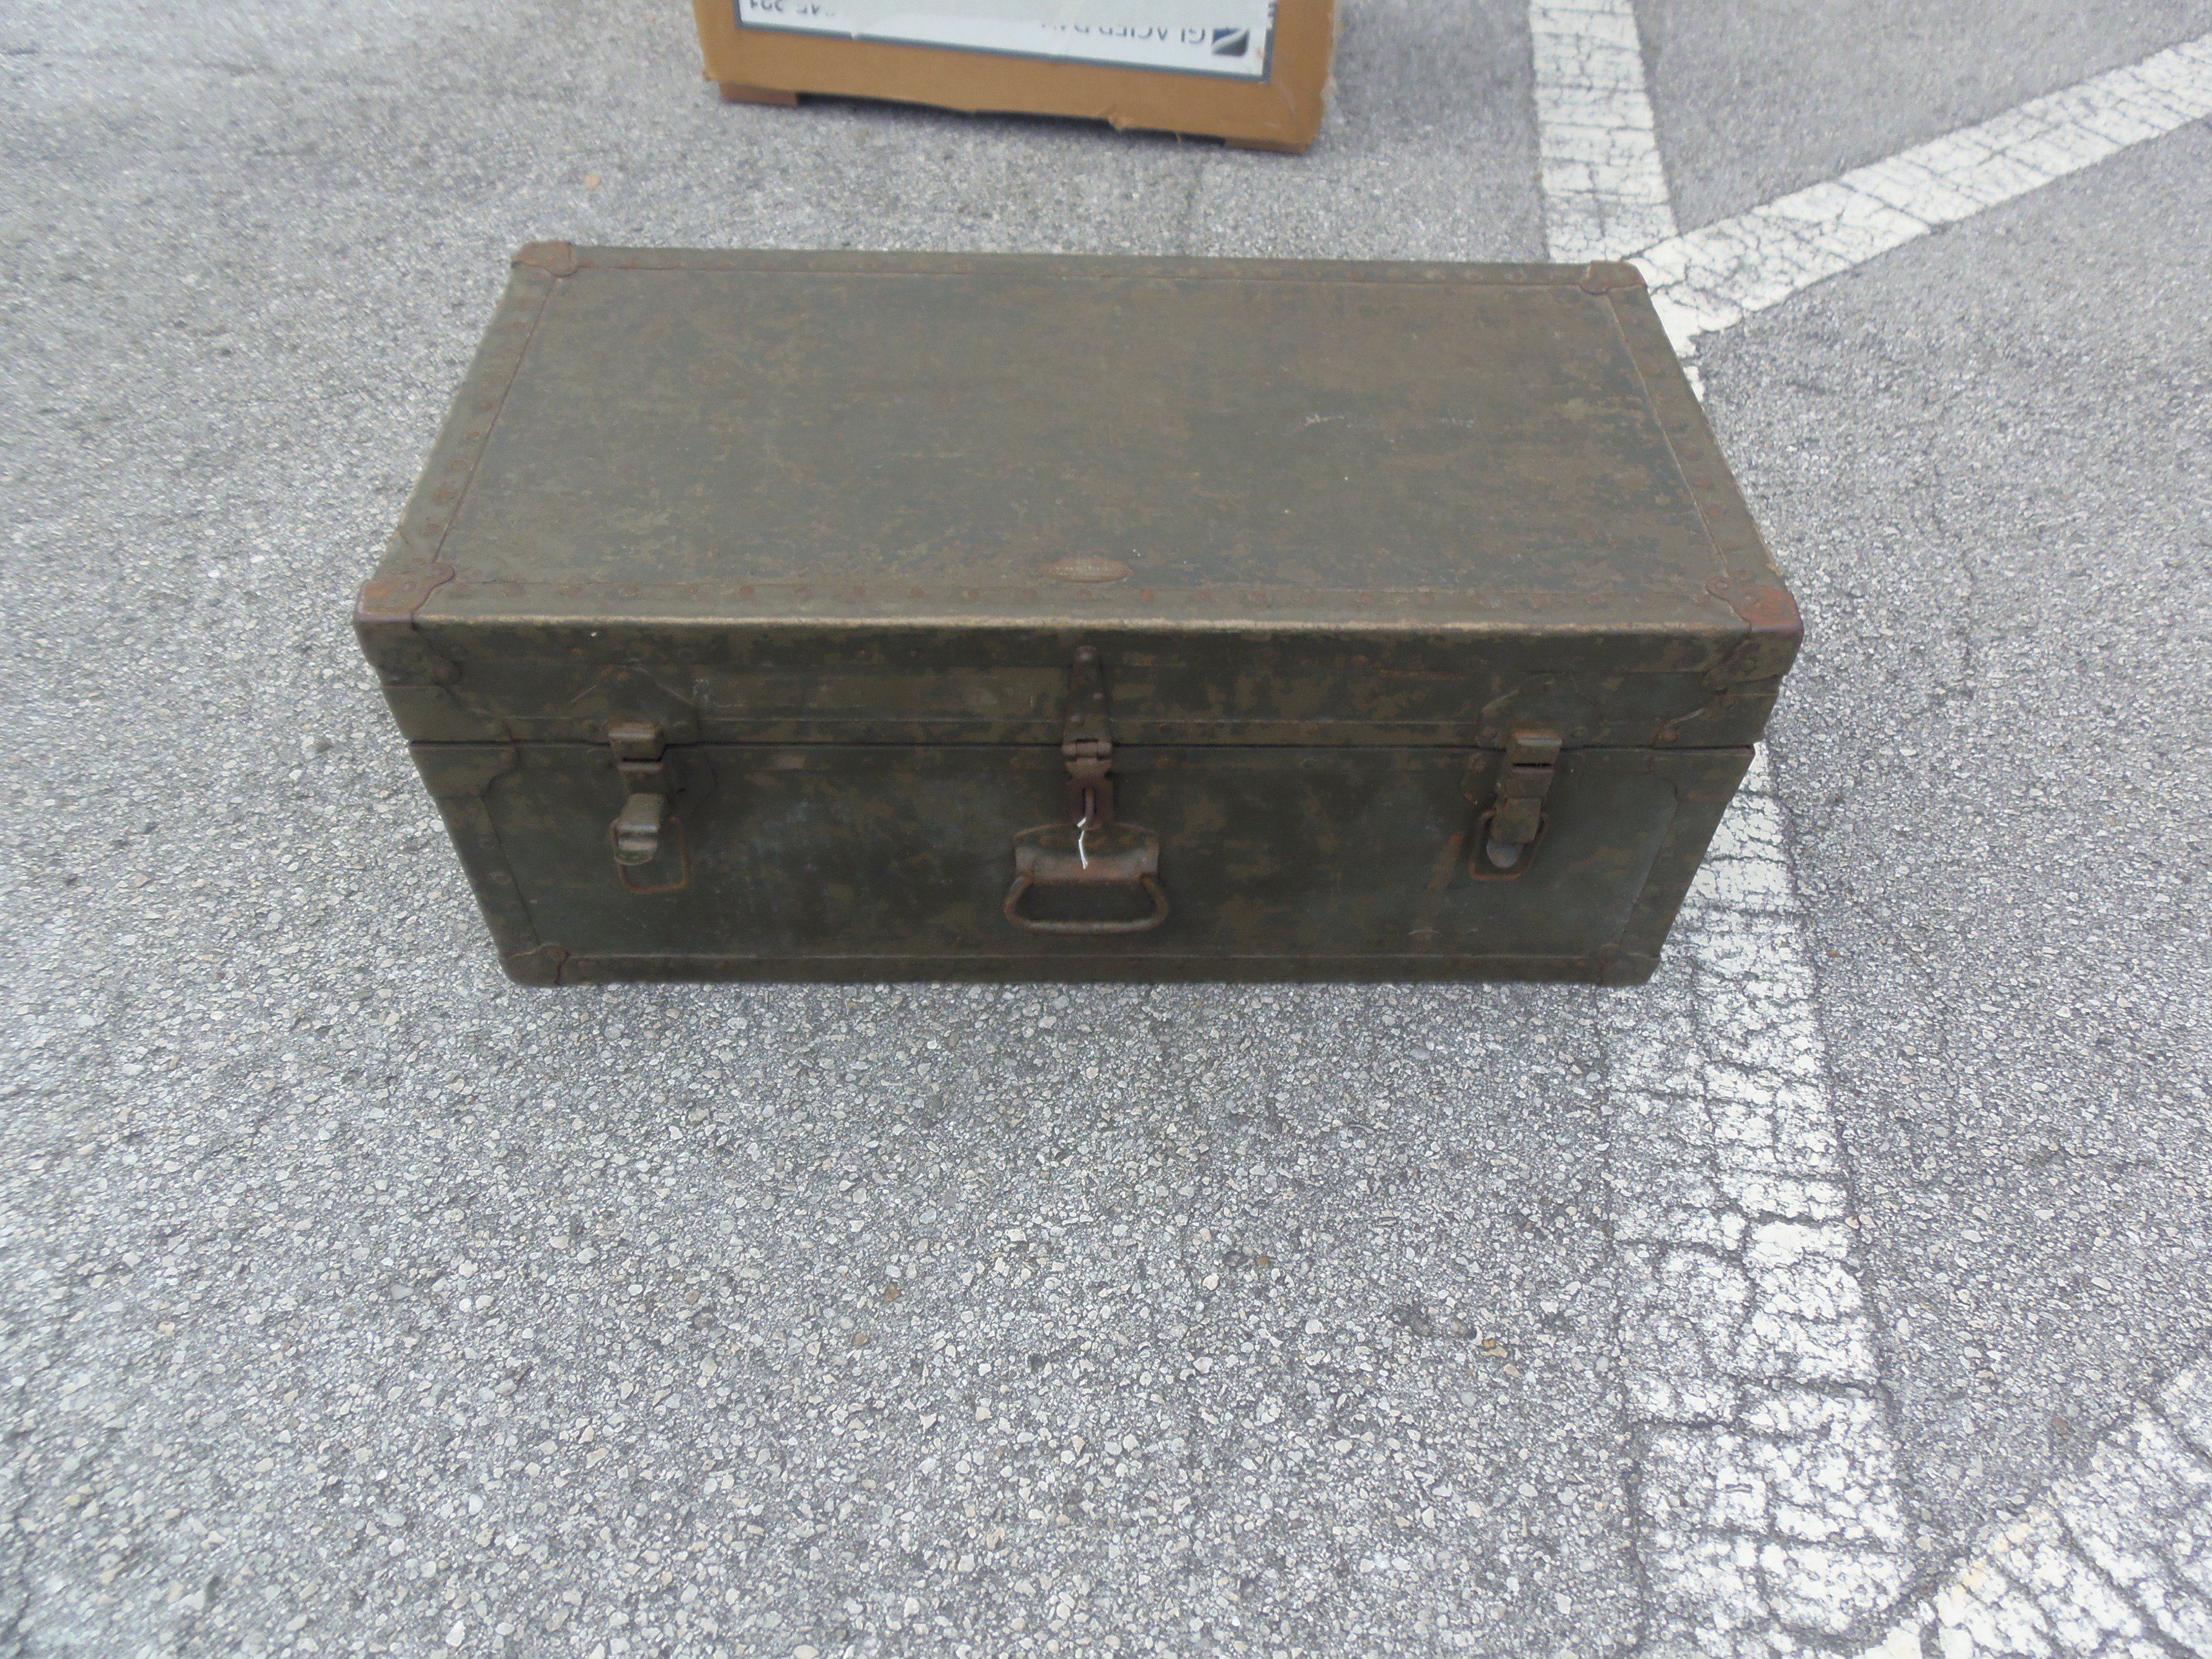 Kenneth Adkins on X: 1949 Vintage Military Army Metal/Wood Foot Locker  w/Storage Trunk & Tray For Sale $150.00 please call 352-364-2193   / X